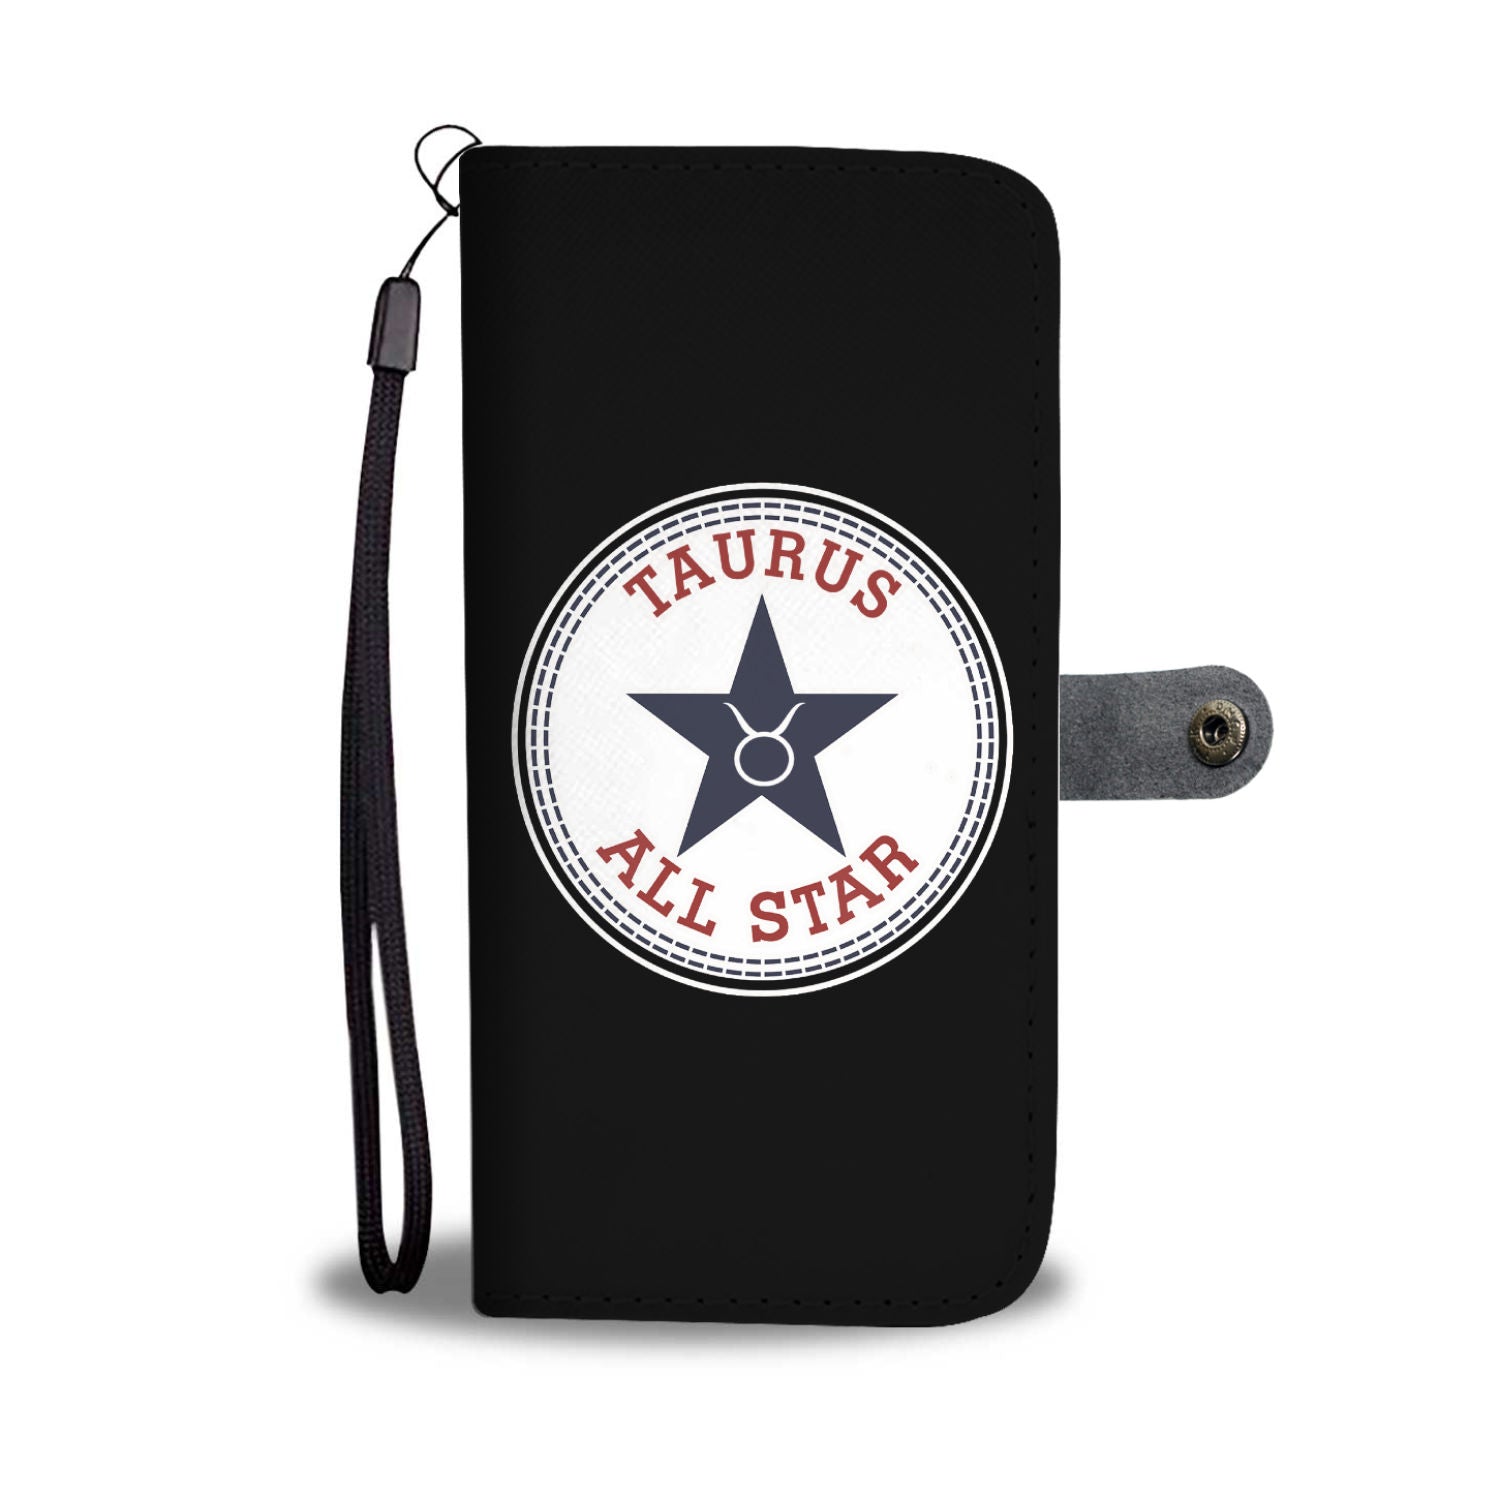 Taurus All Star Phone Wallet